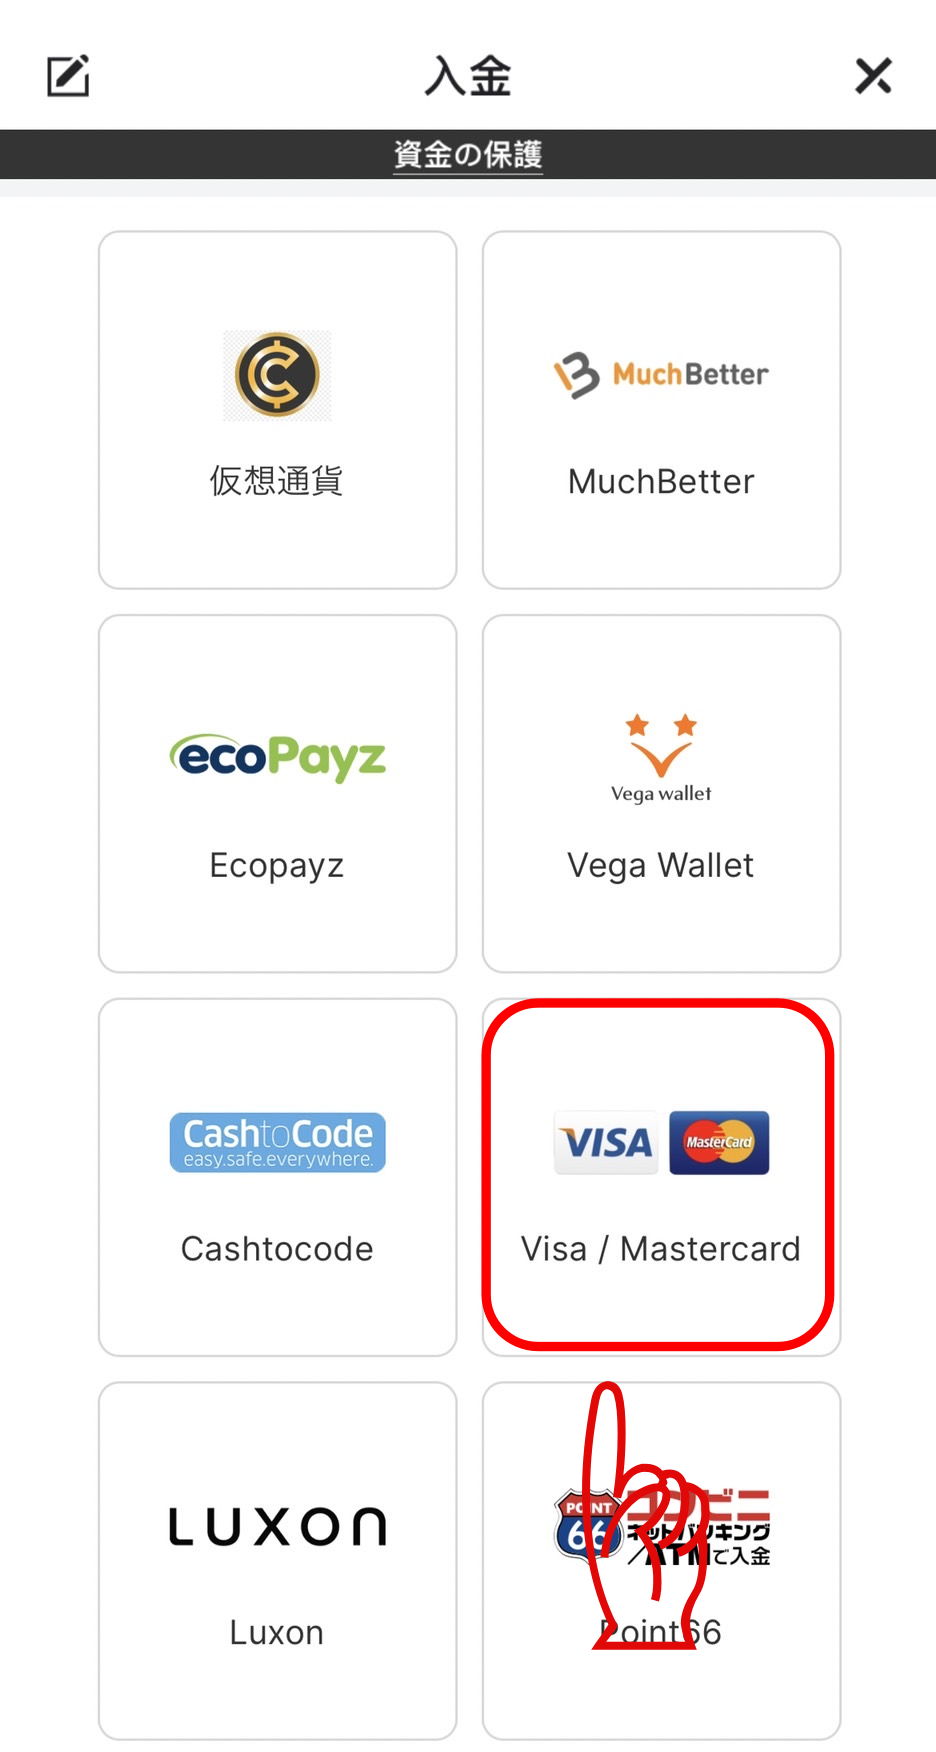 Visa/Mastercardを選択